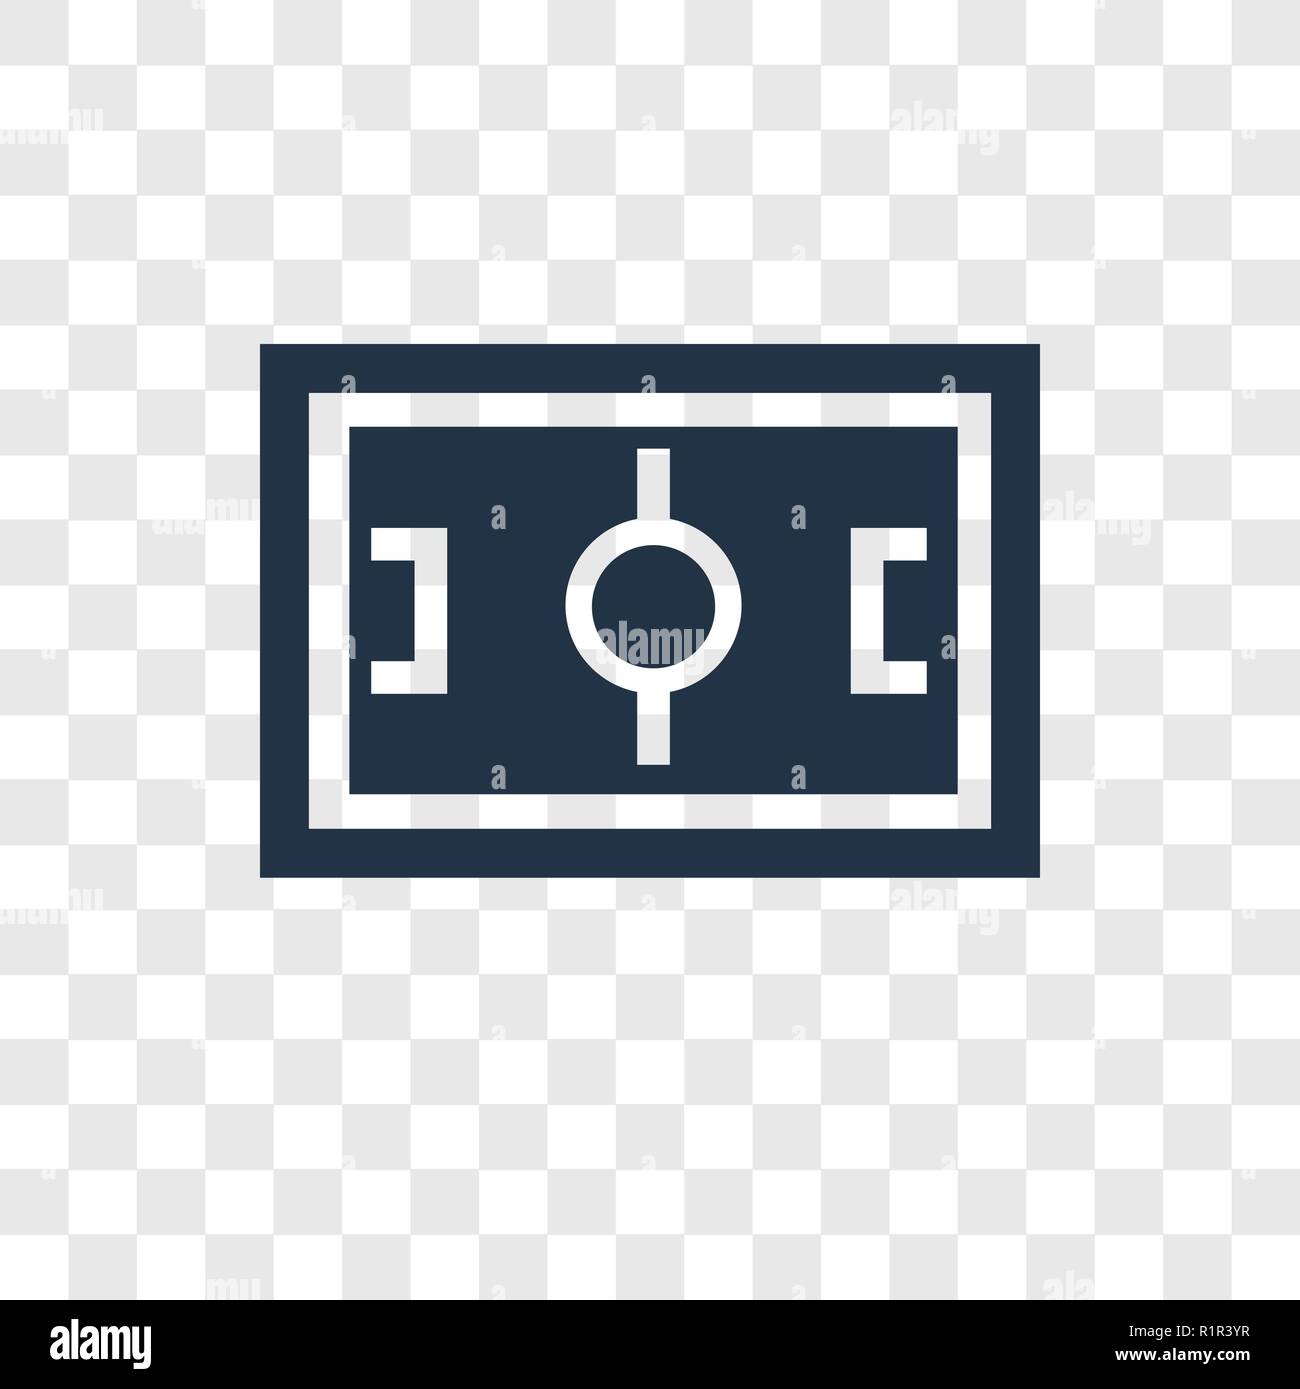 Football field vector icon isolated on transparent background, Football field transparency logo concept Stock Vector